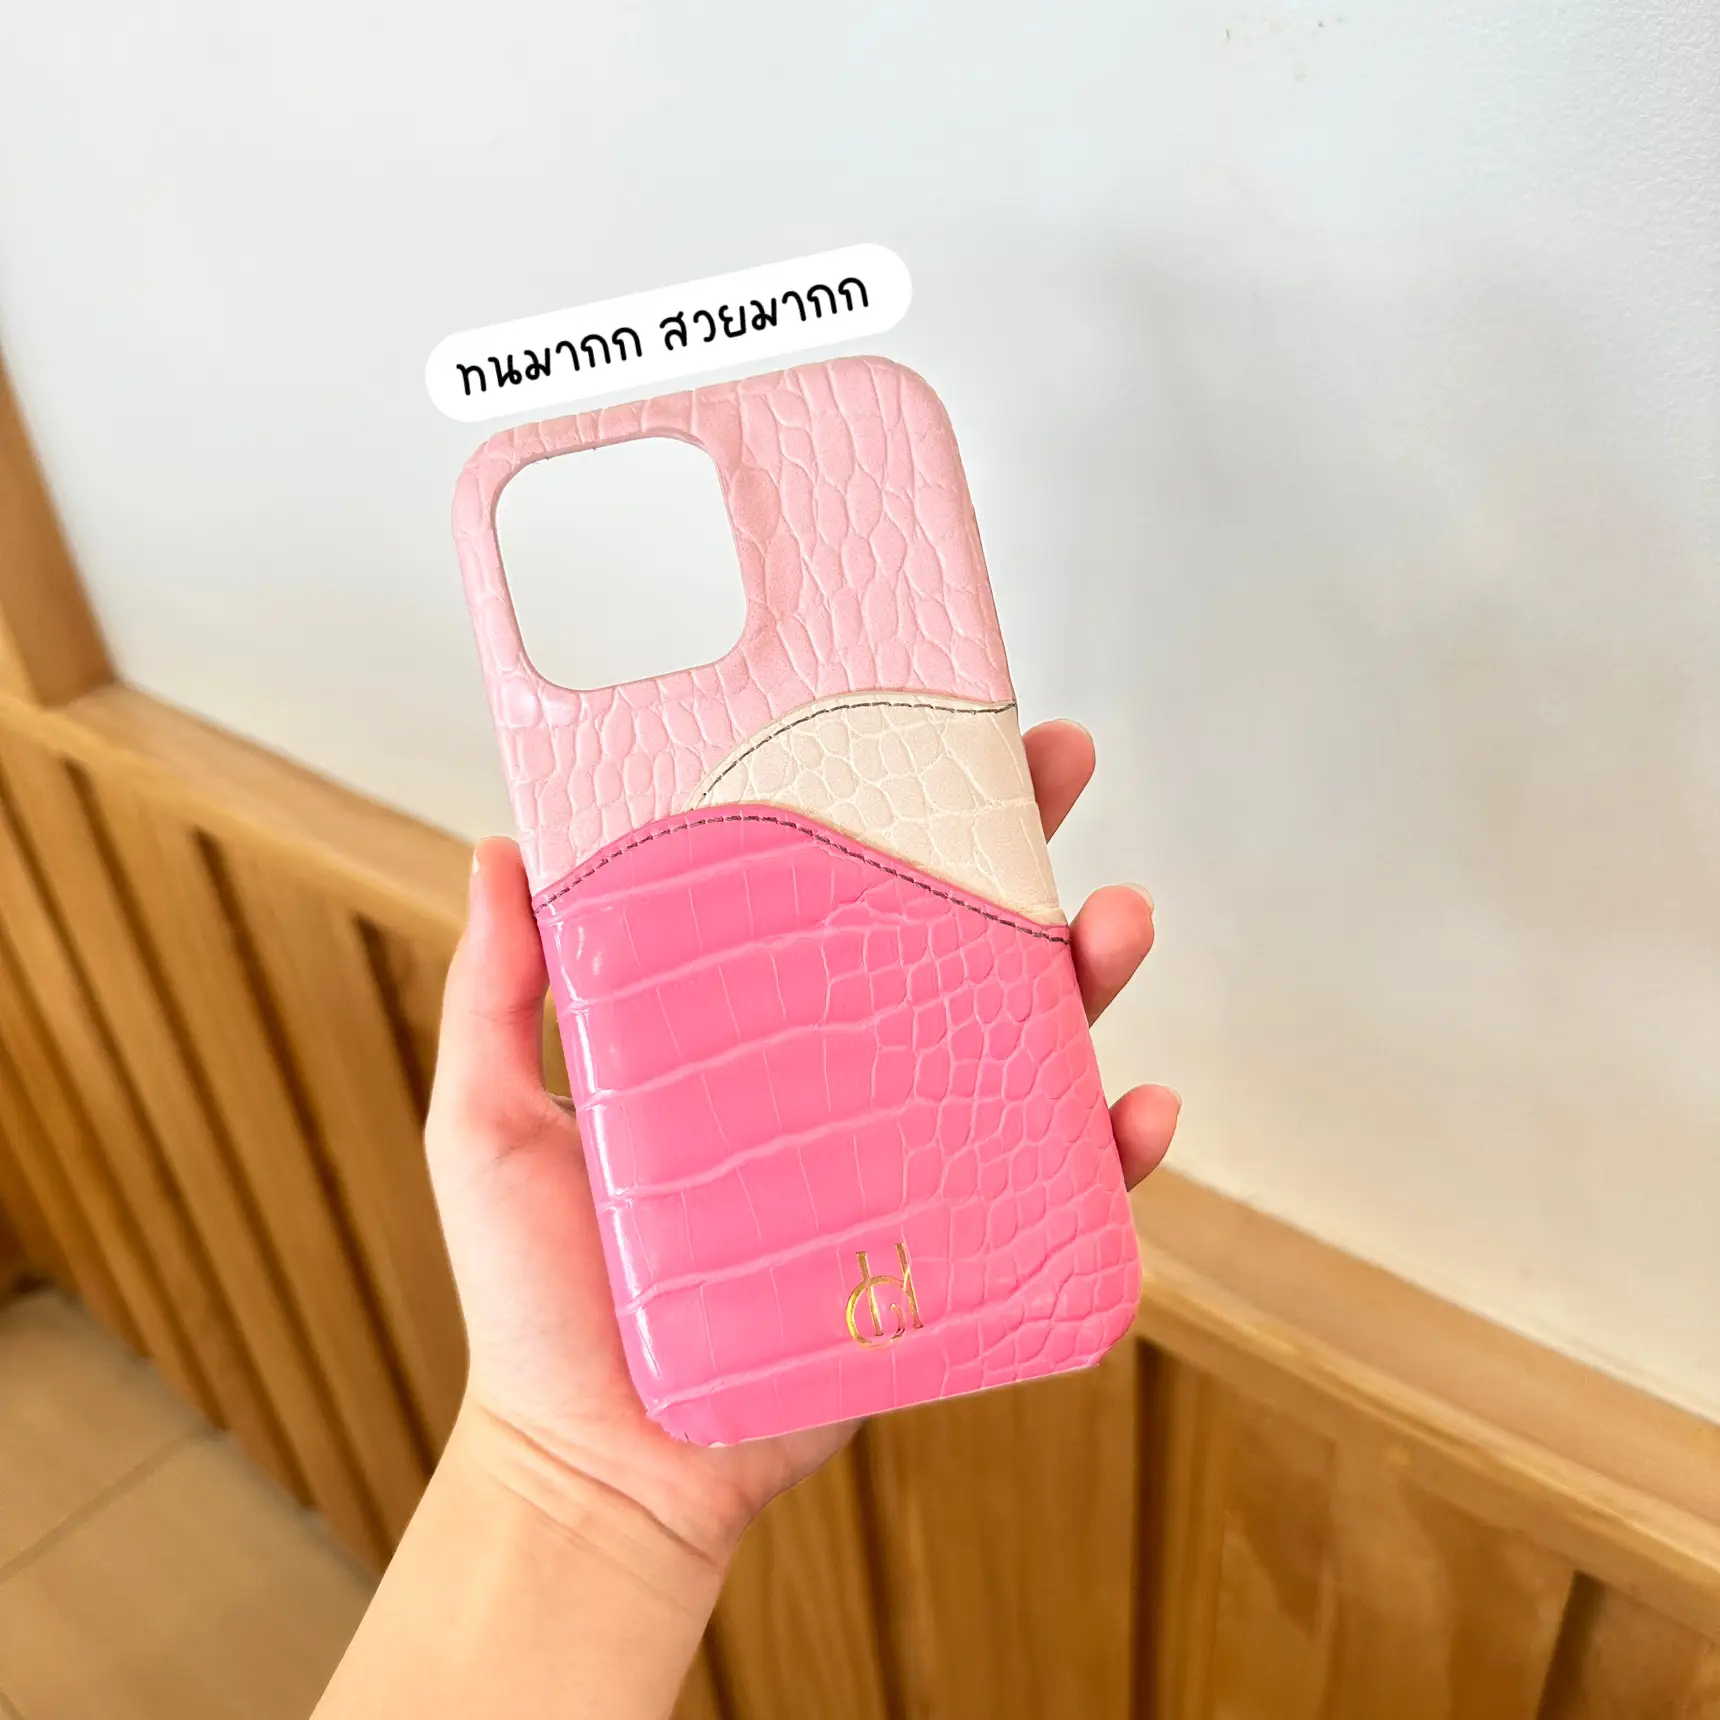 iphone 14 pro max case louis vuitton pink